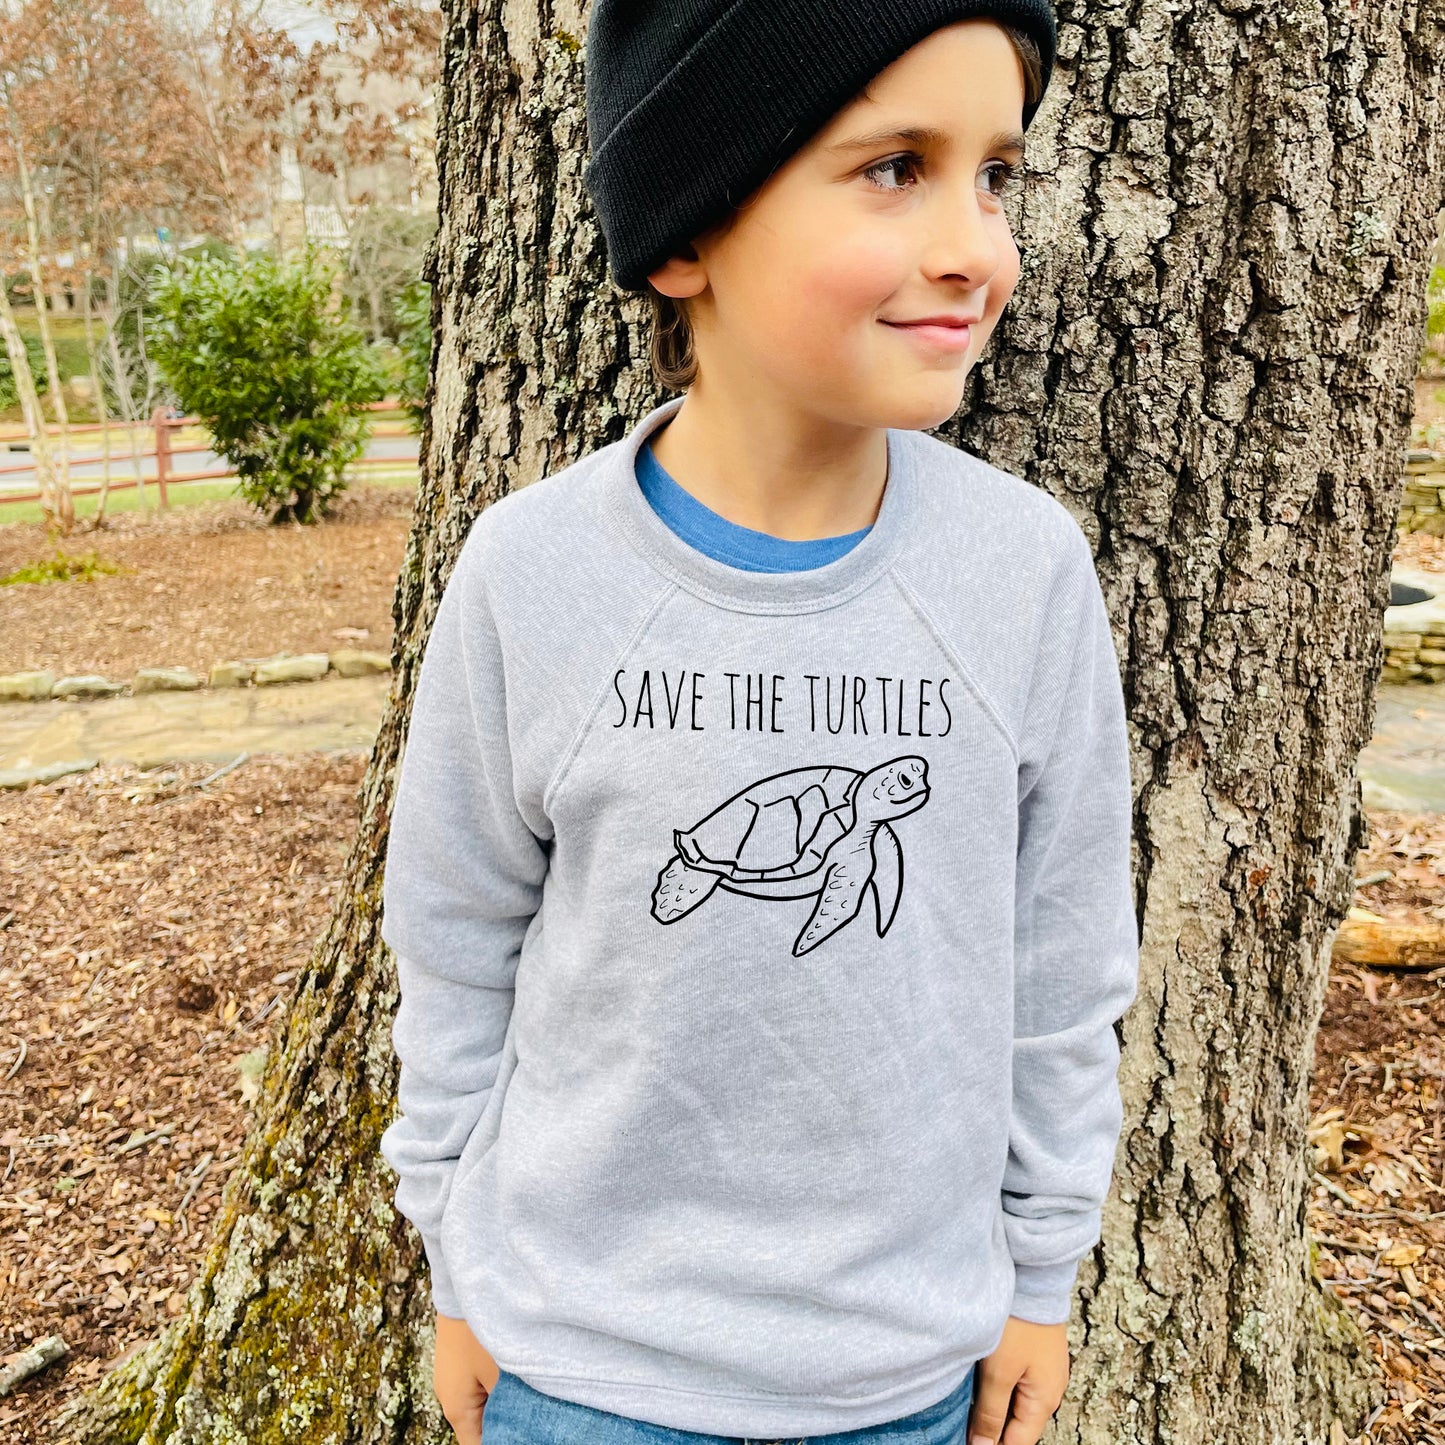 Save The Turtles - Kid's Sweatshirt - Heather Gray or Mauve